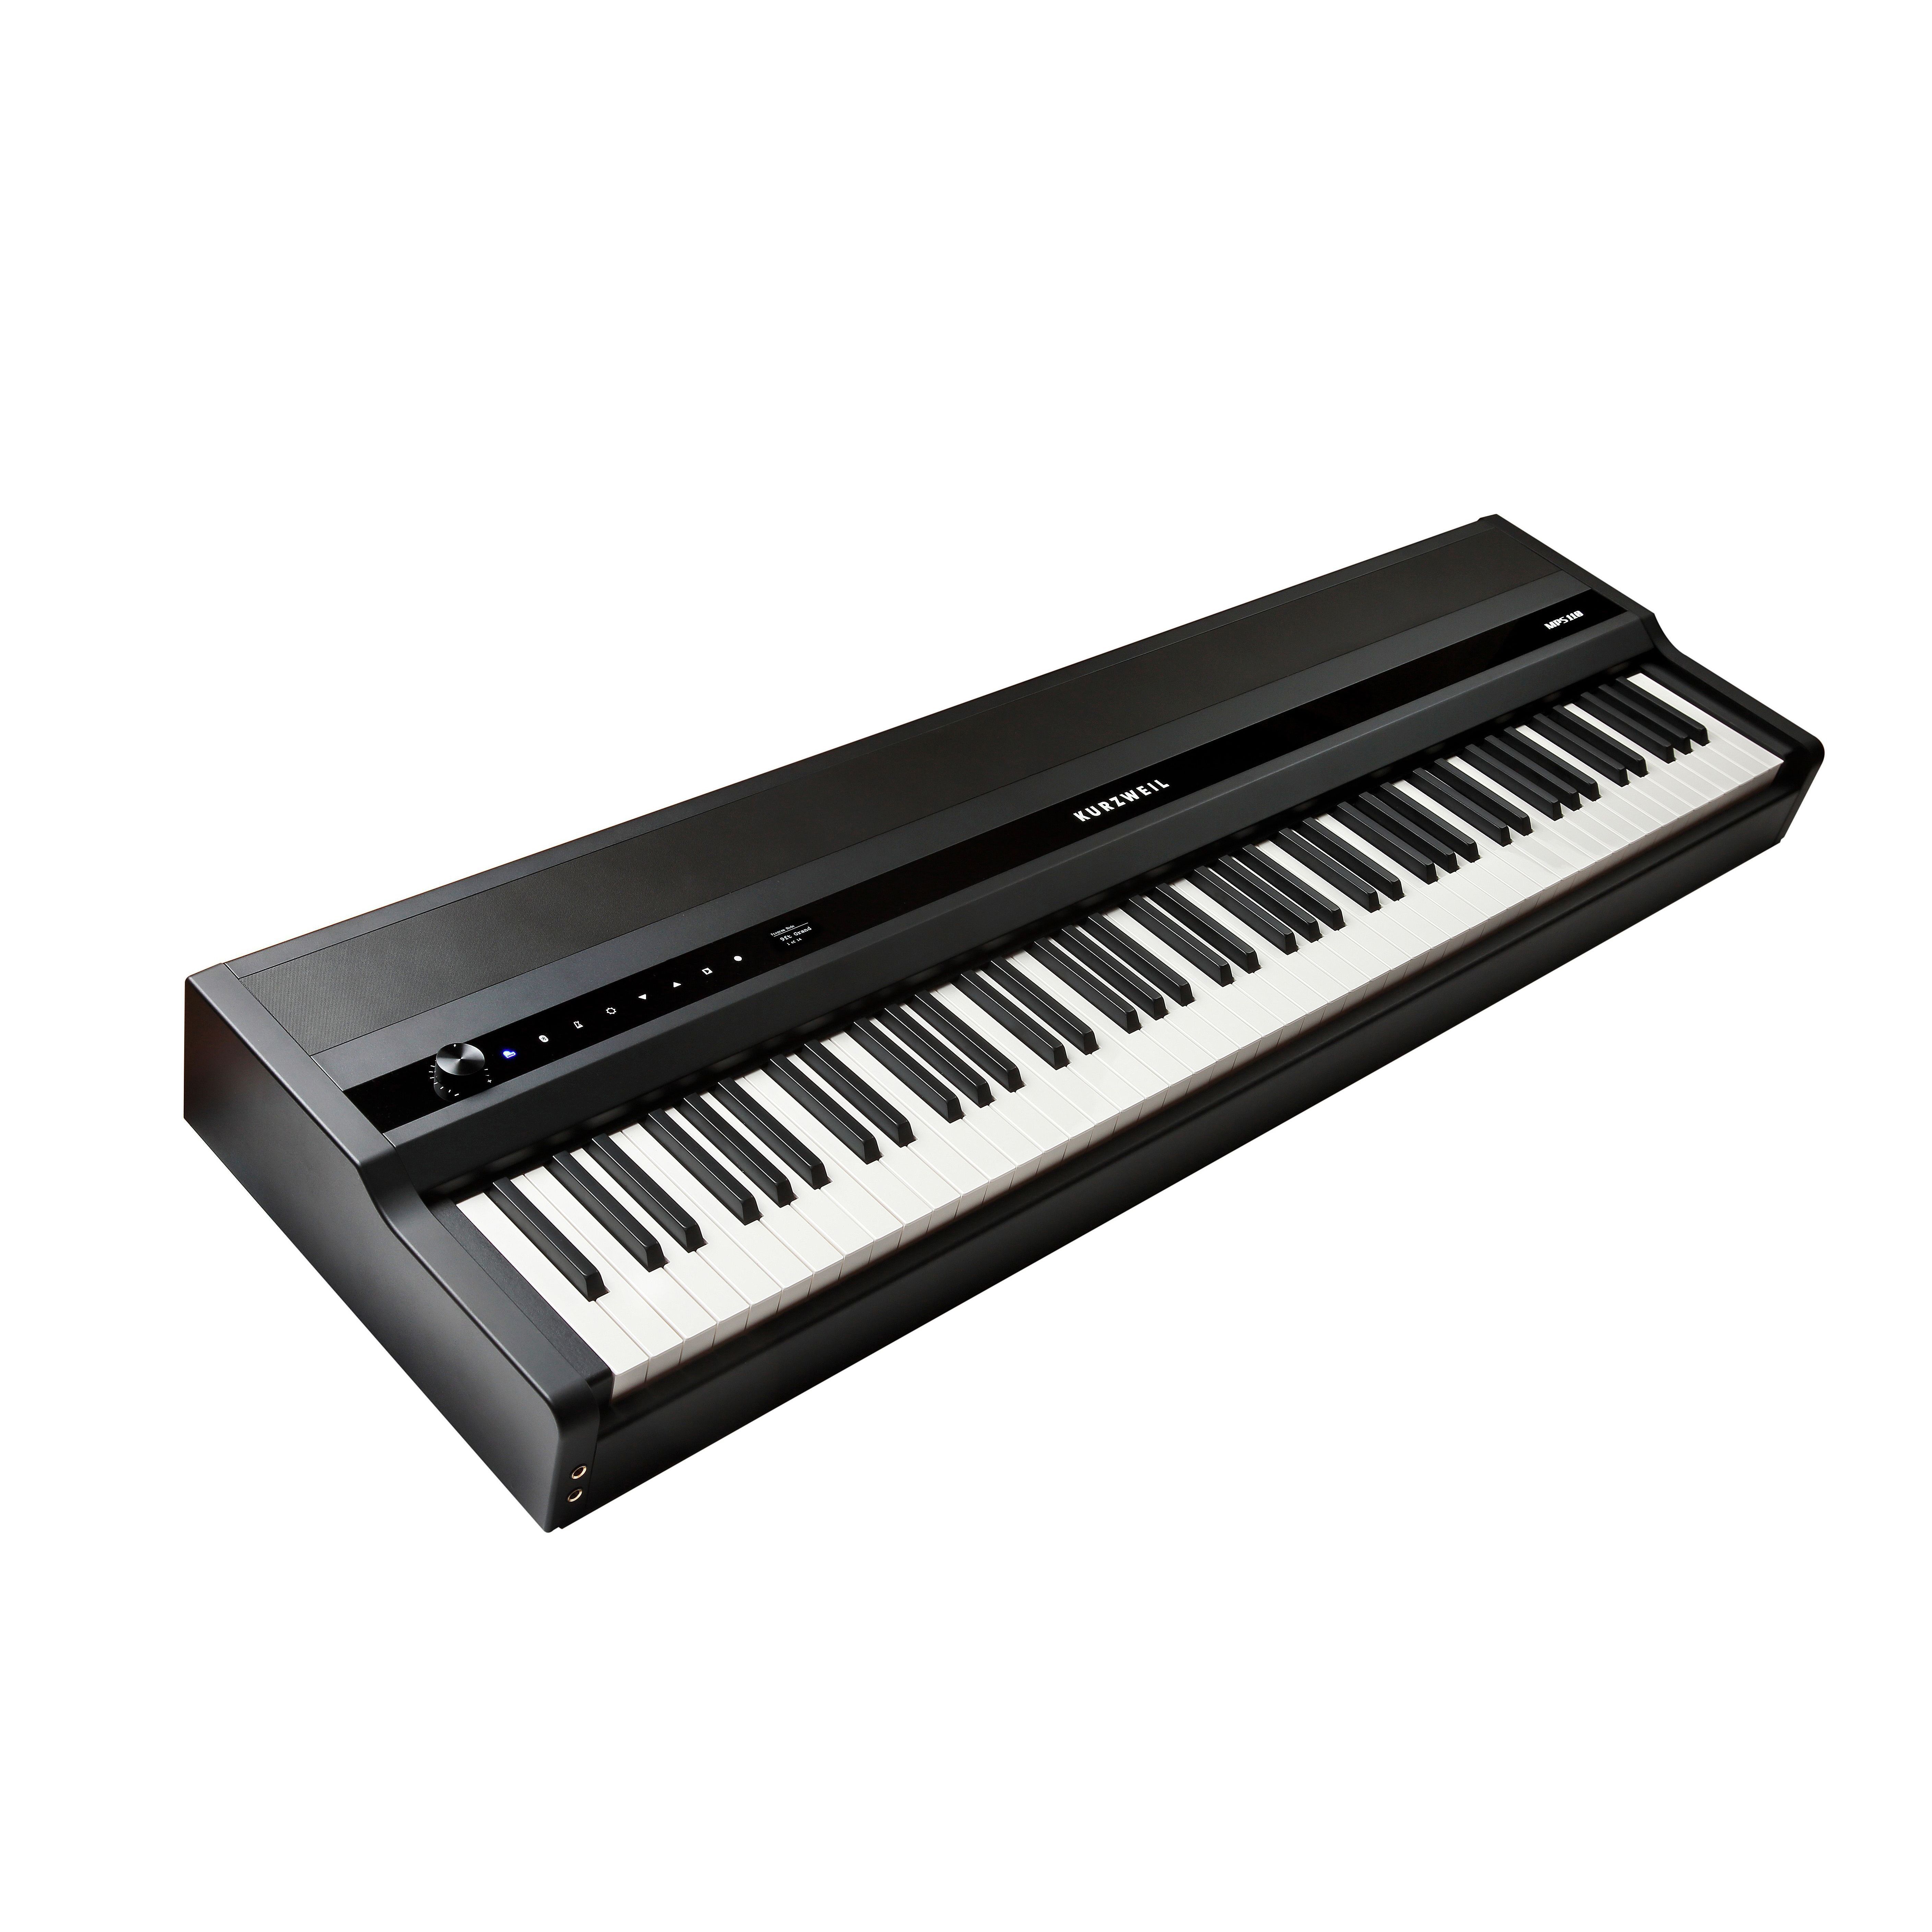 Kurzweil MPS110 Цифровые пианино